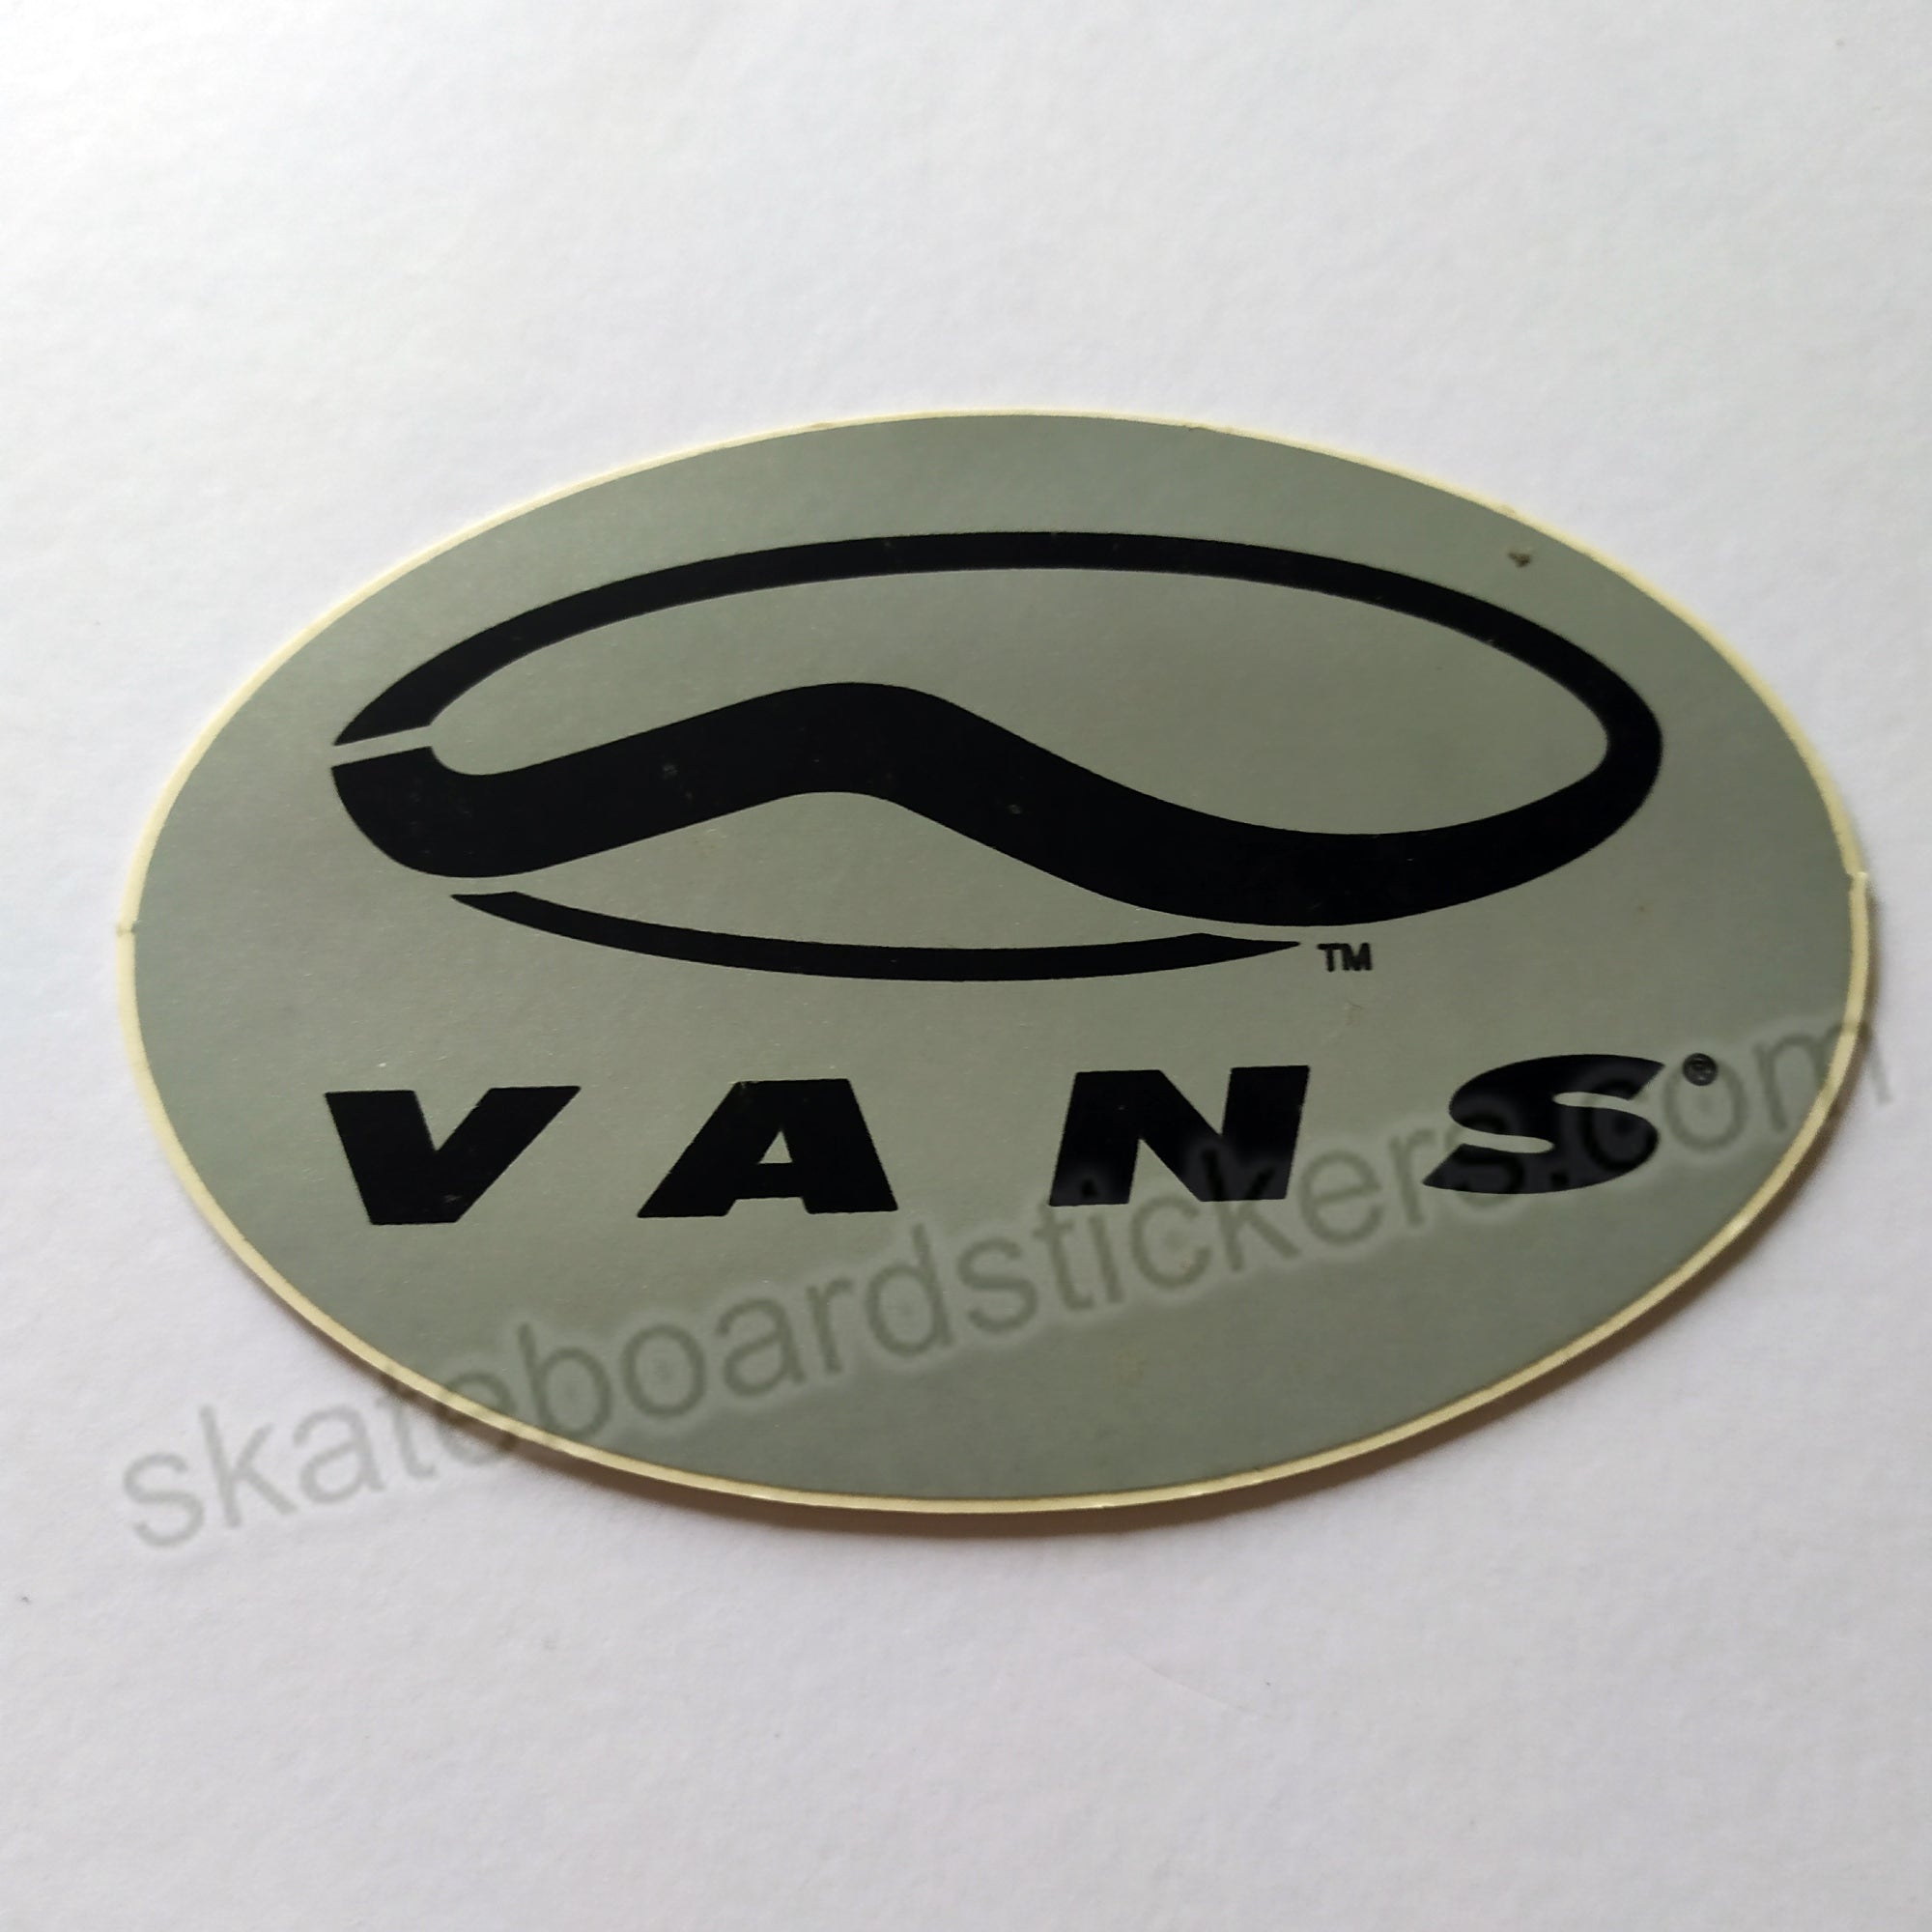 Vans Shoes Skateboard Sticker from the 90s! - SkateboardStickers.com